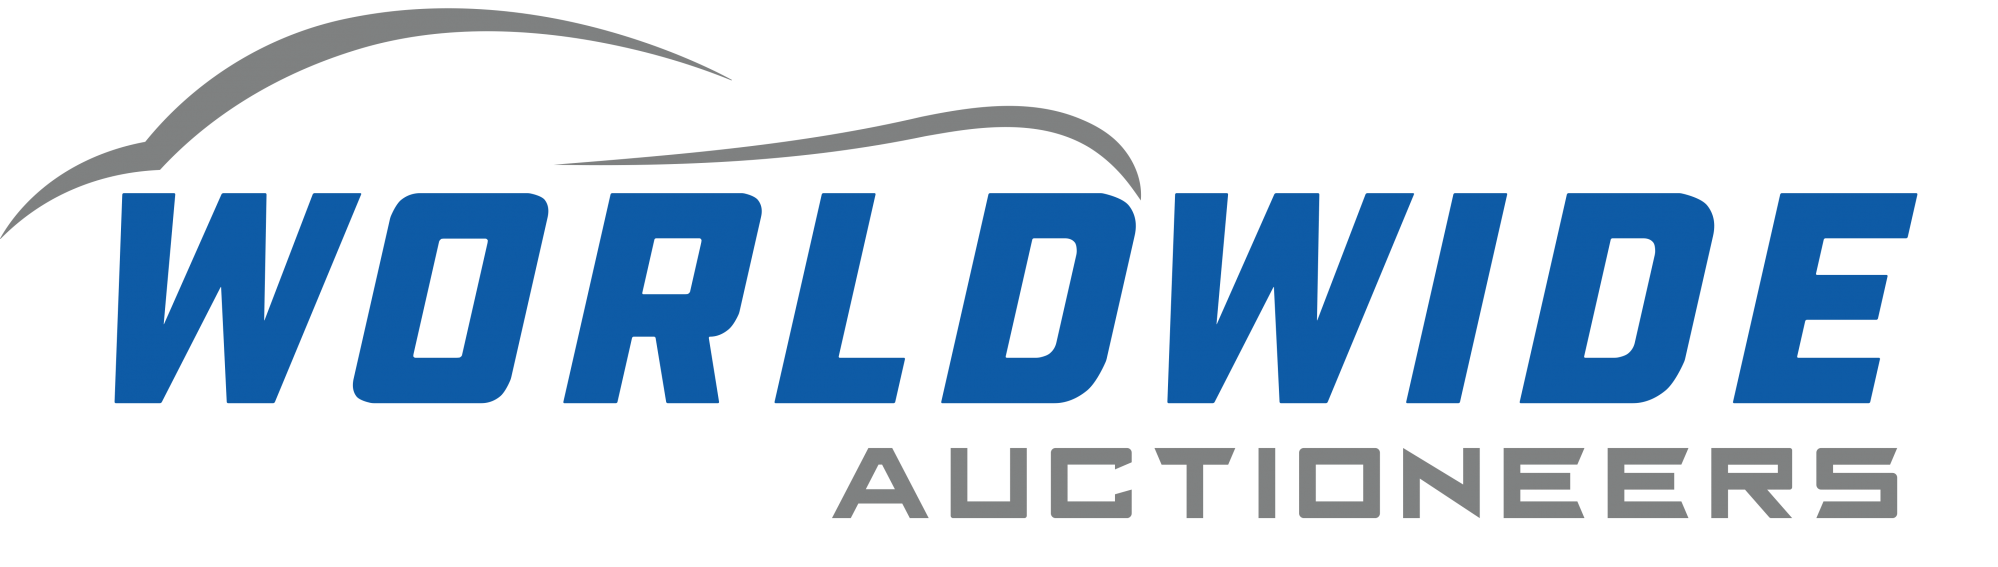 Worldwide Auctioneers